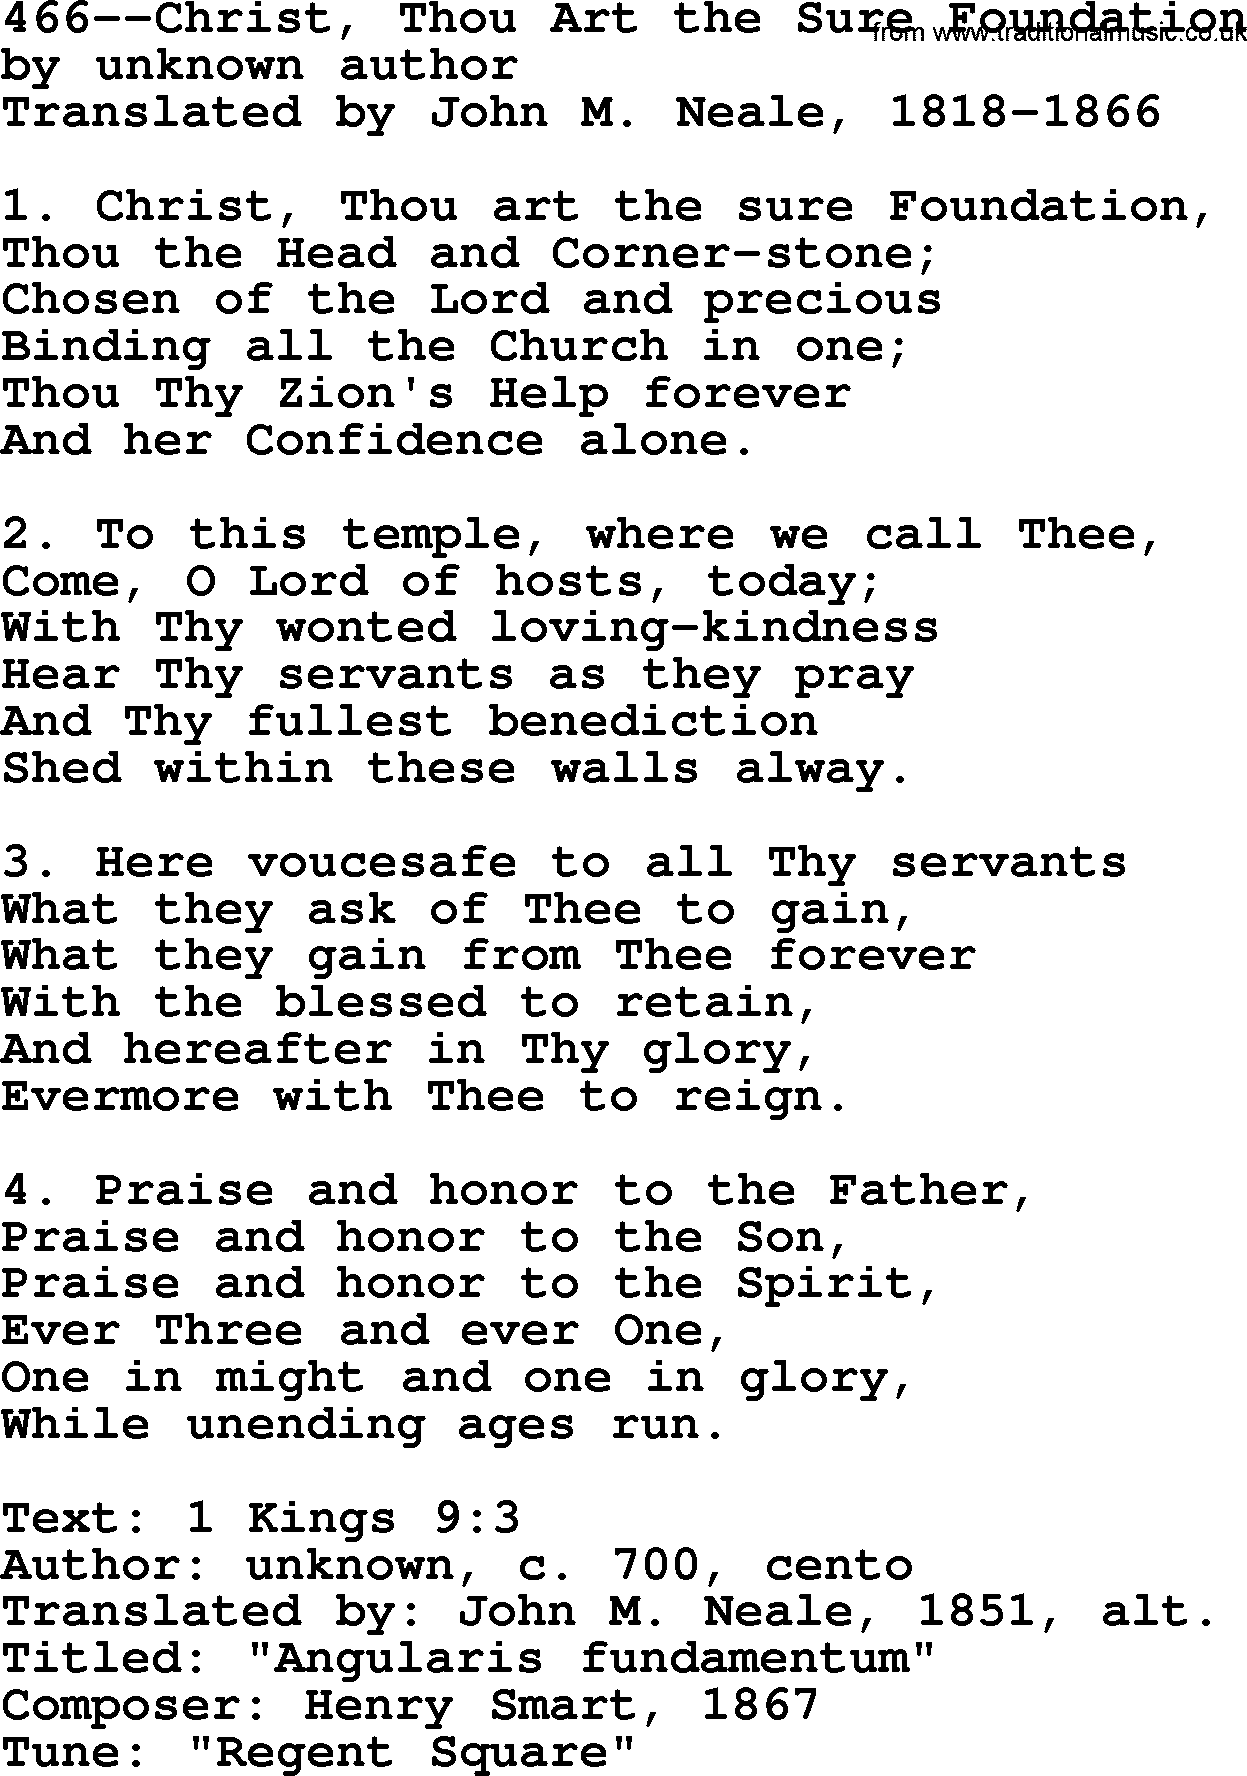 Lutheran Hymn: 466--Christ, Thou Art the Sure Foundation.txt lyrics with PDF